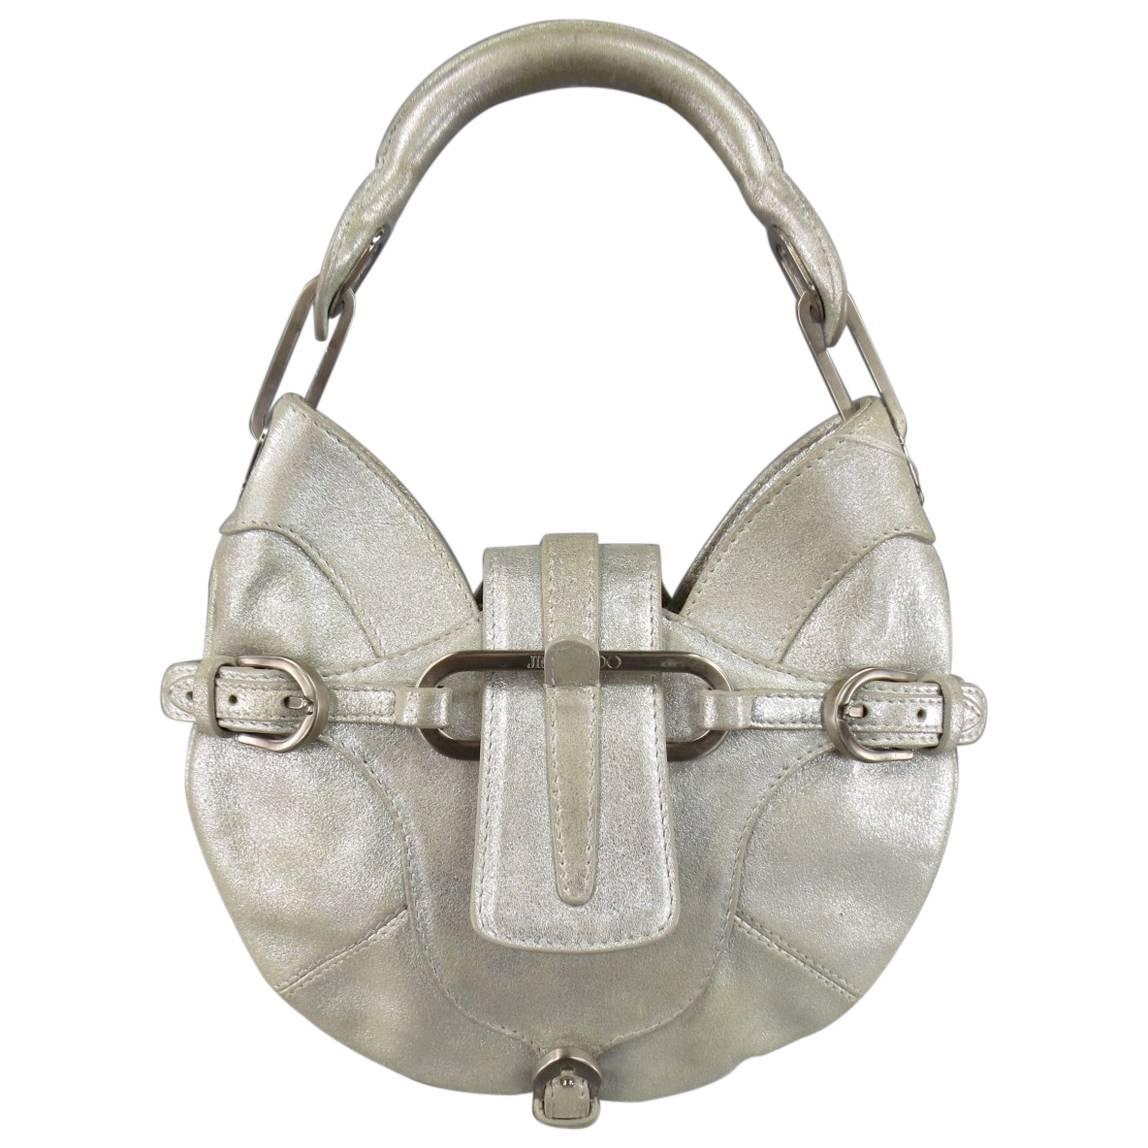 JIMMY CHOO Purse - Handbag - Metallic Silver Leather Mini Tulita Hobo